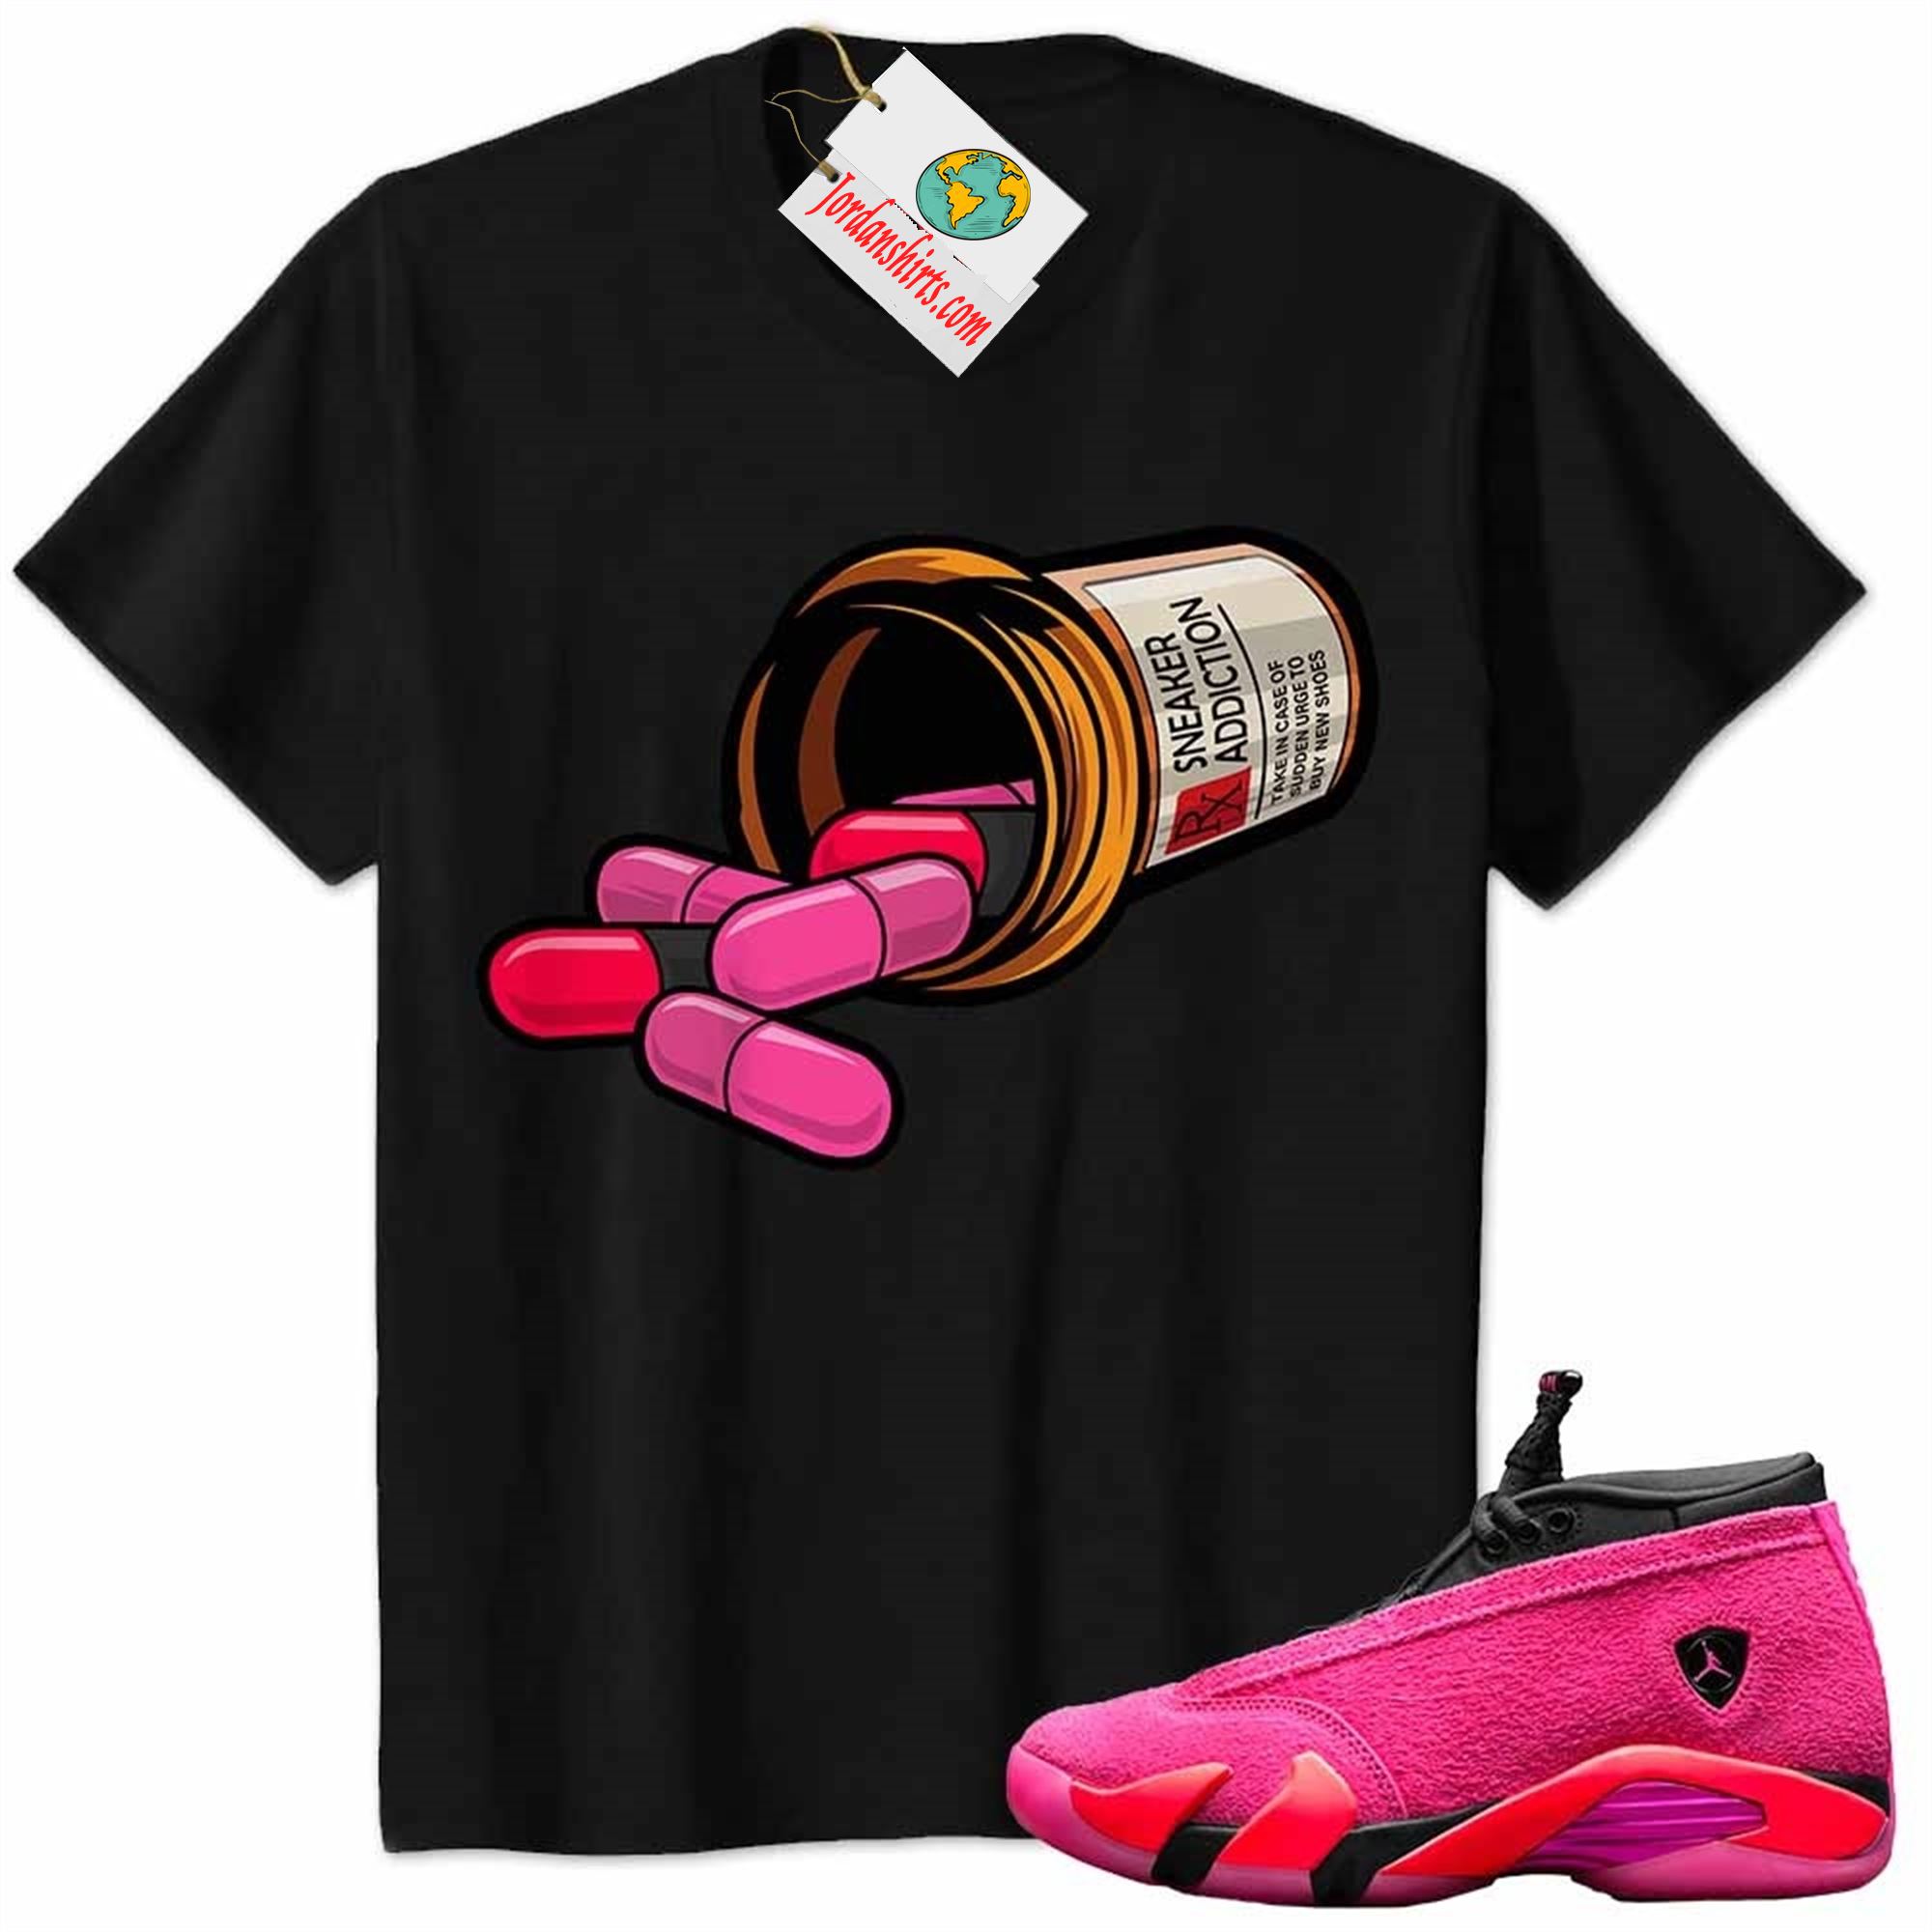 Jordan 14 Shirt, Rx Drugs Pill Bottle Sneaker Addiction Black Air Jordan 14 Wmns Shocking Pink 14s Full Size Up To 5xl